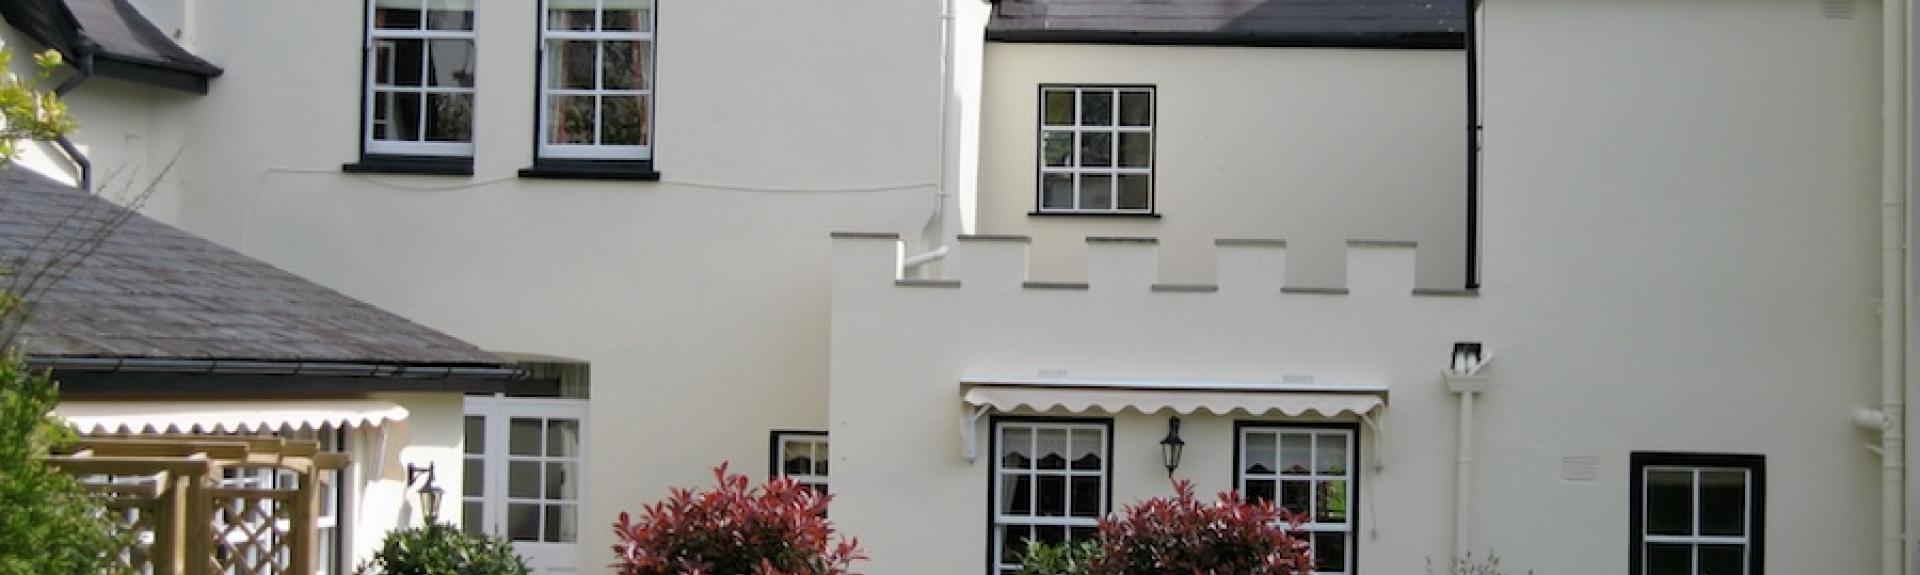 A large Regency cottage with large sash windows overlooks a flower-filled garden.